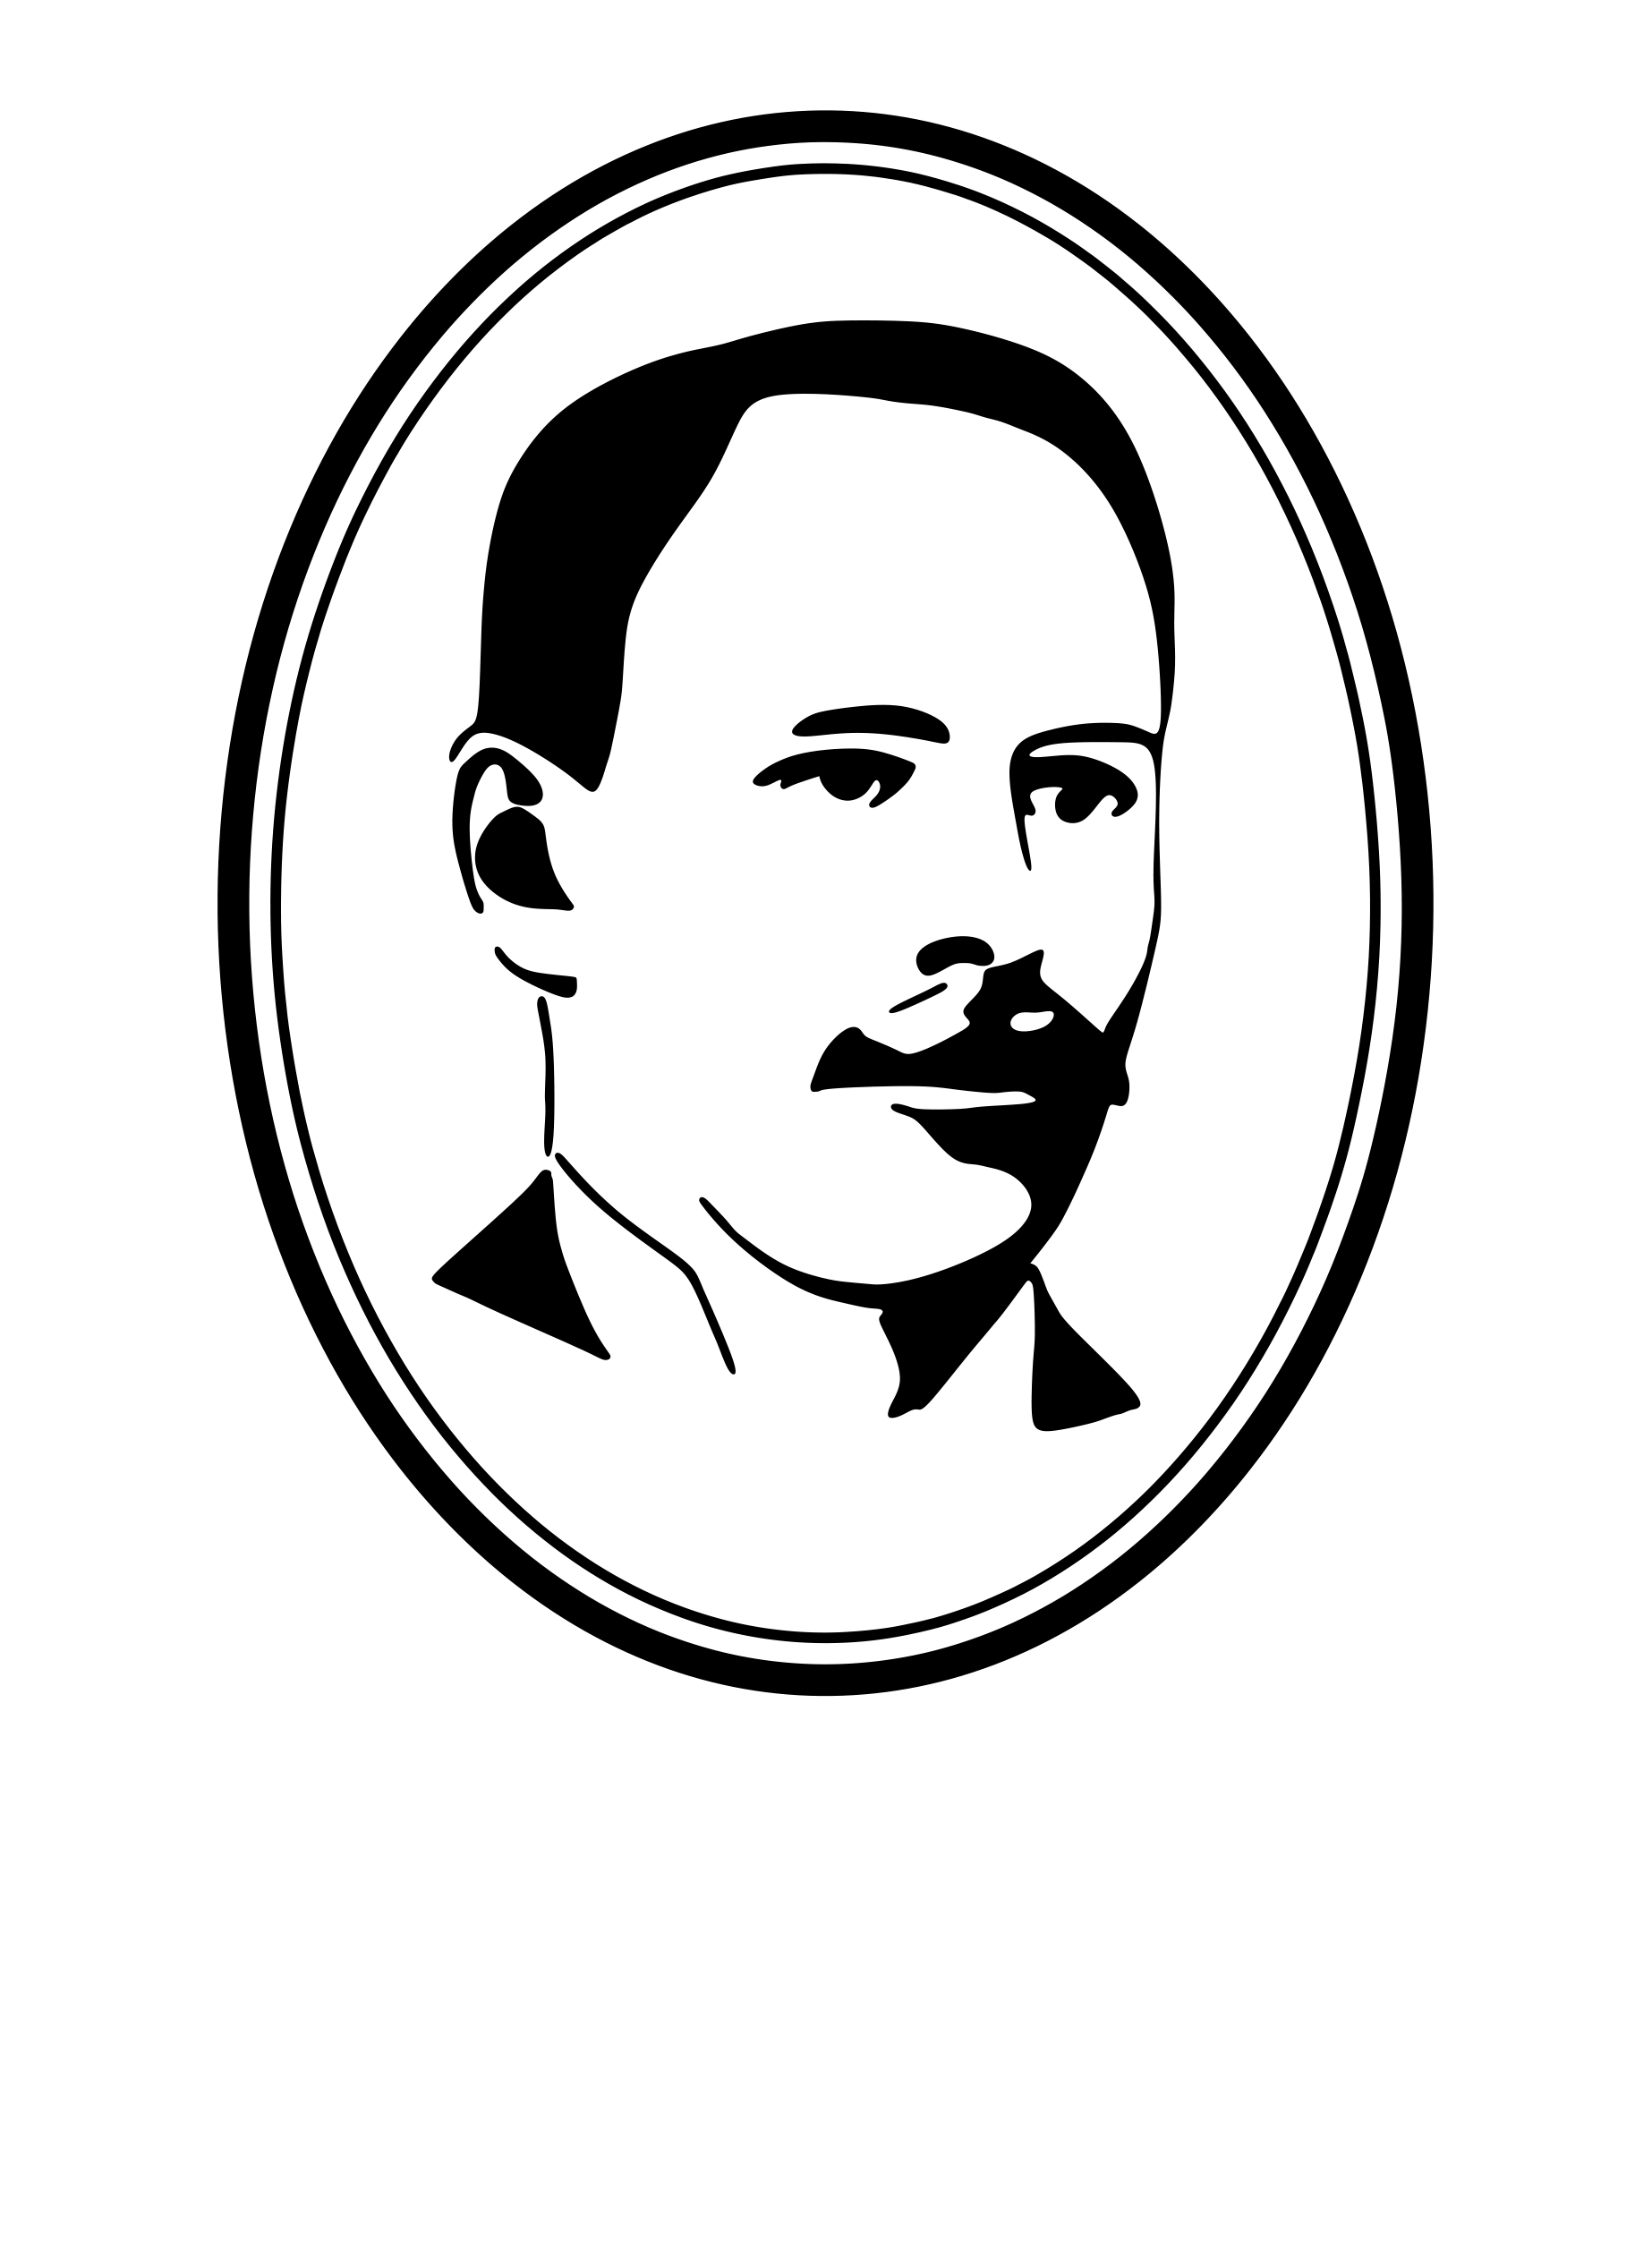 F. Hallett &amp; Son